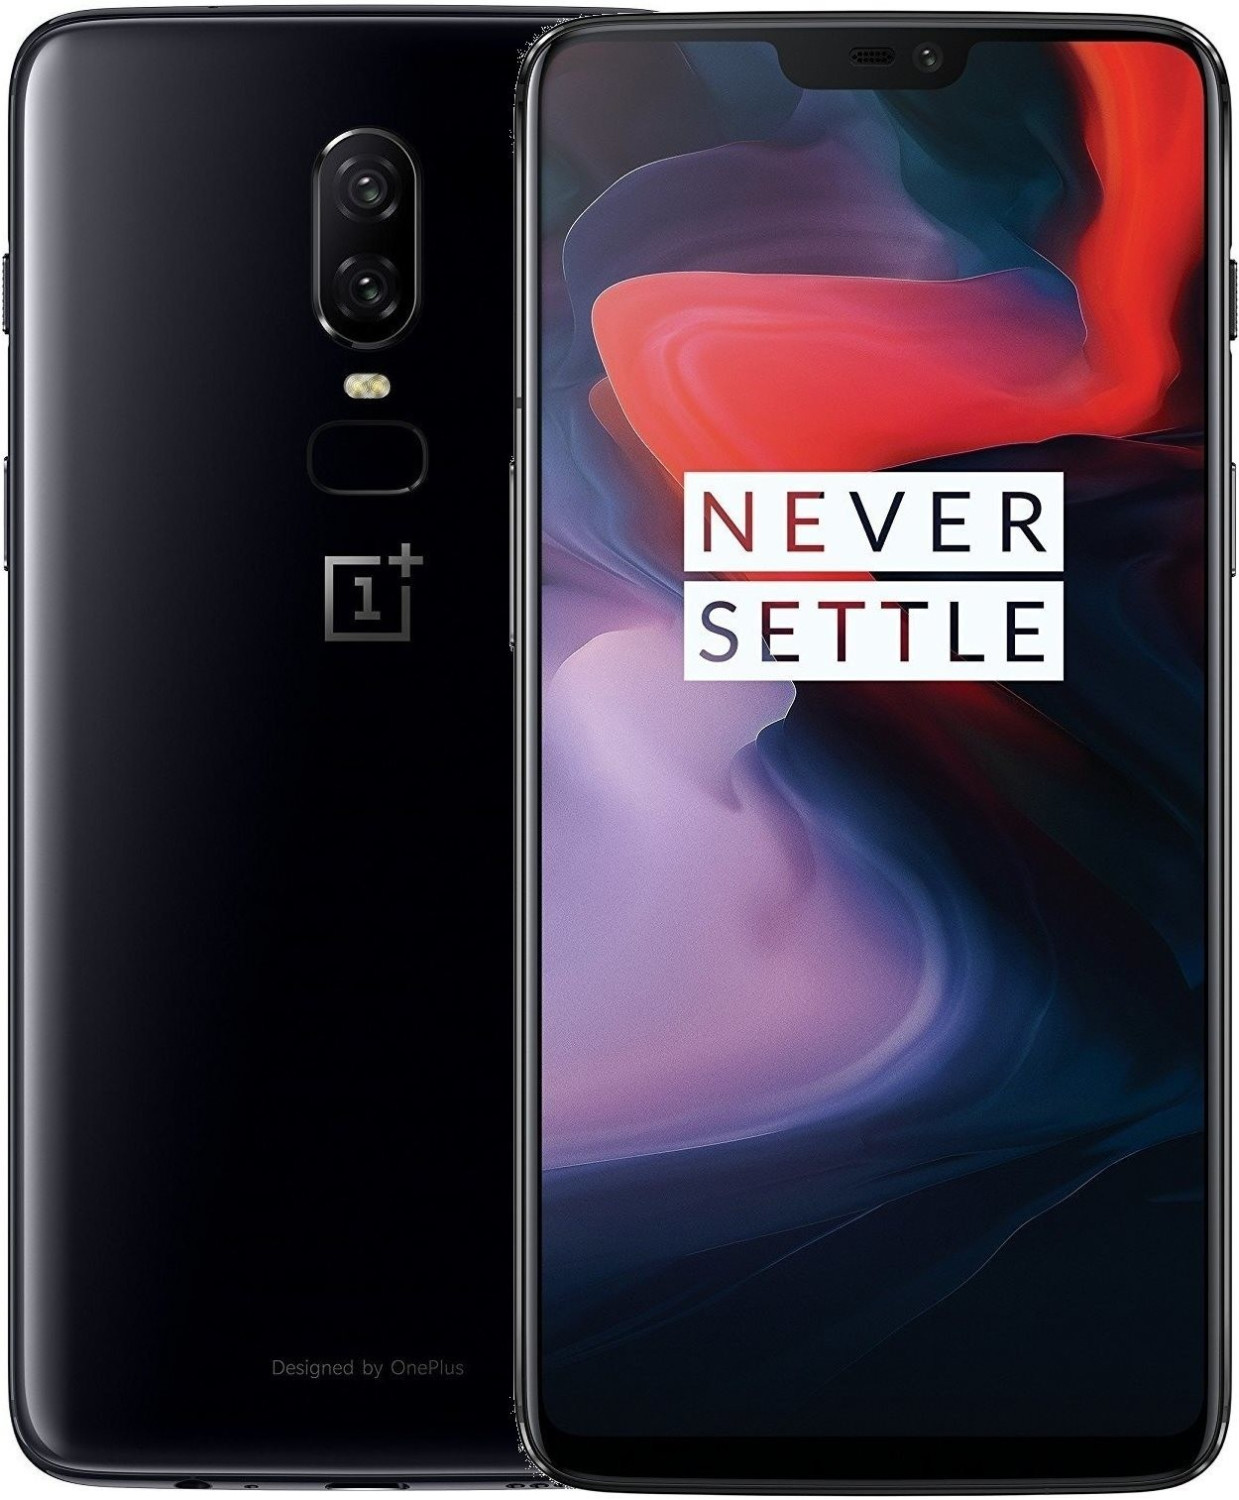 OnePlus 6 64GB mirror black